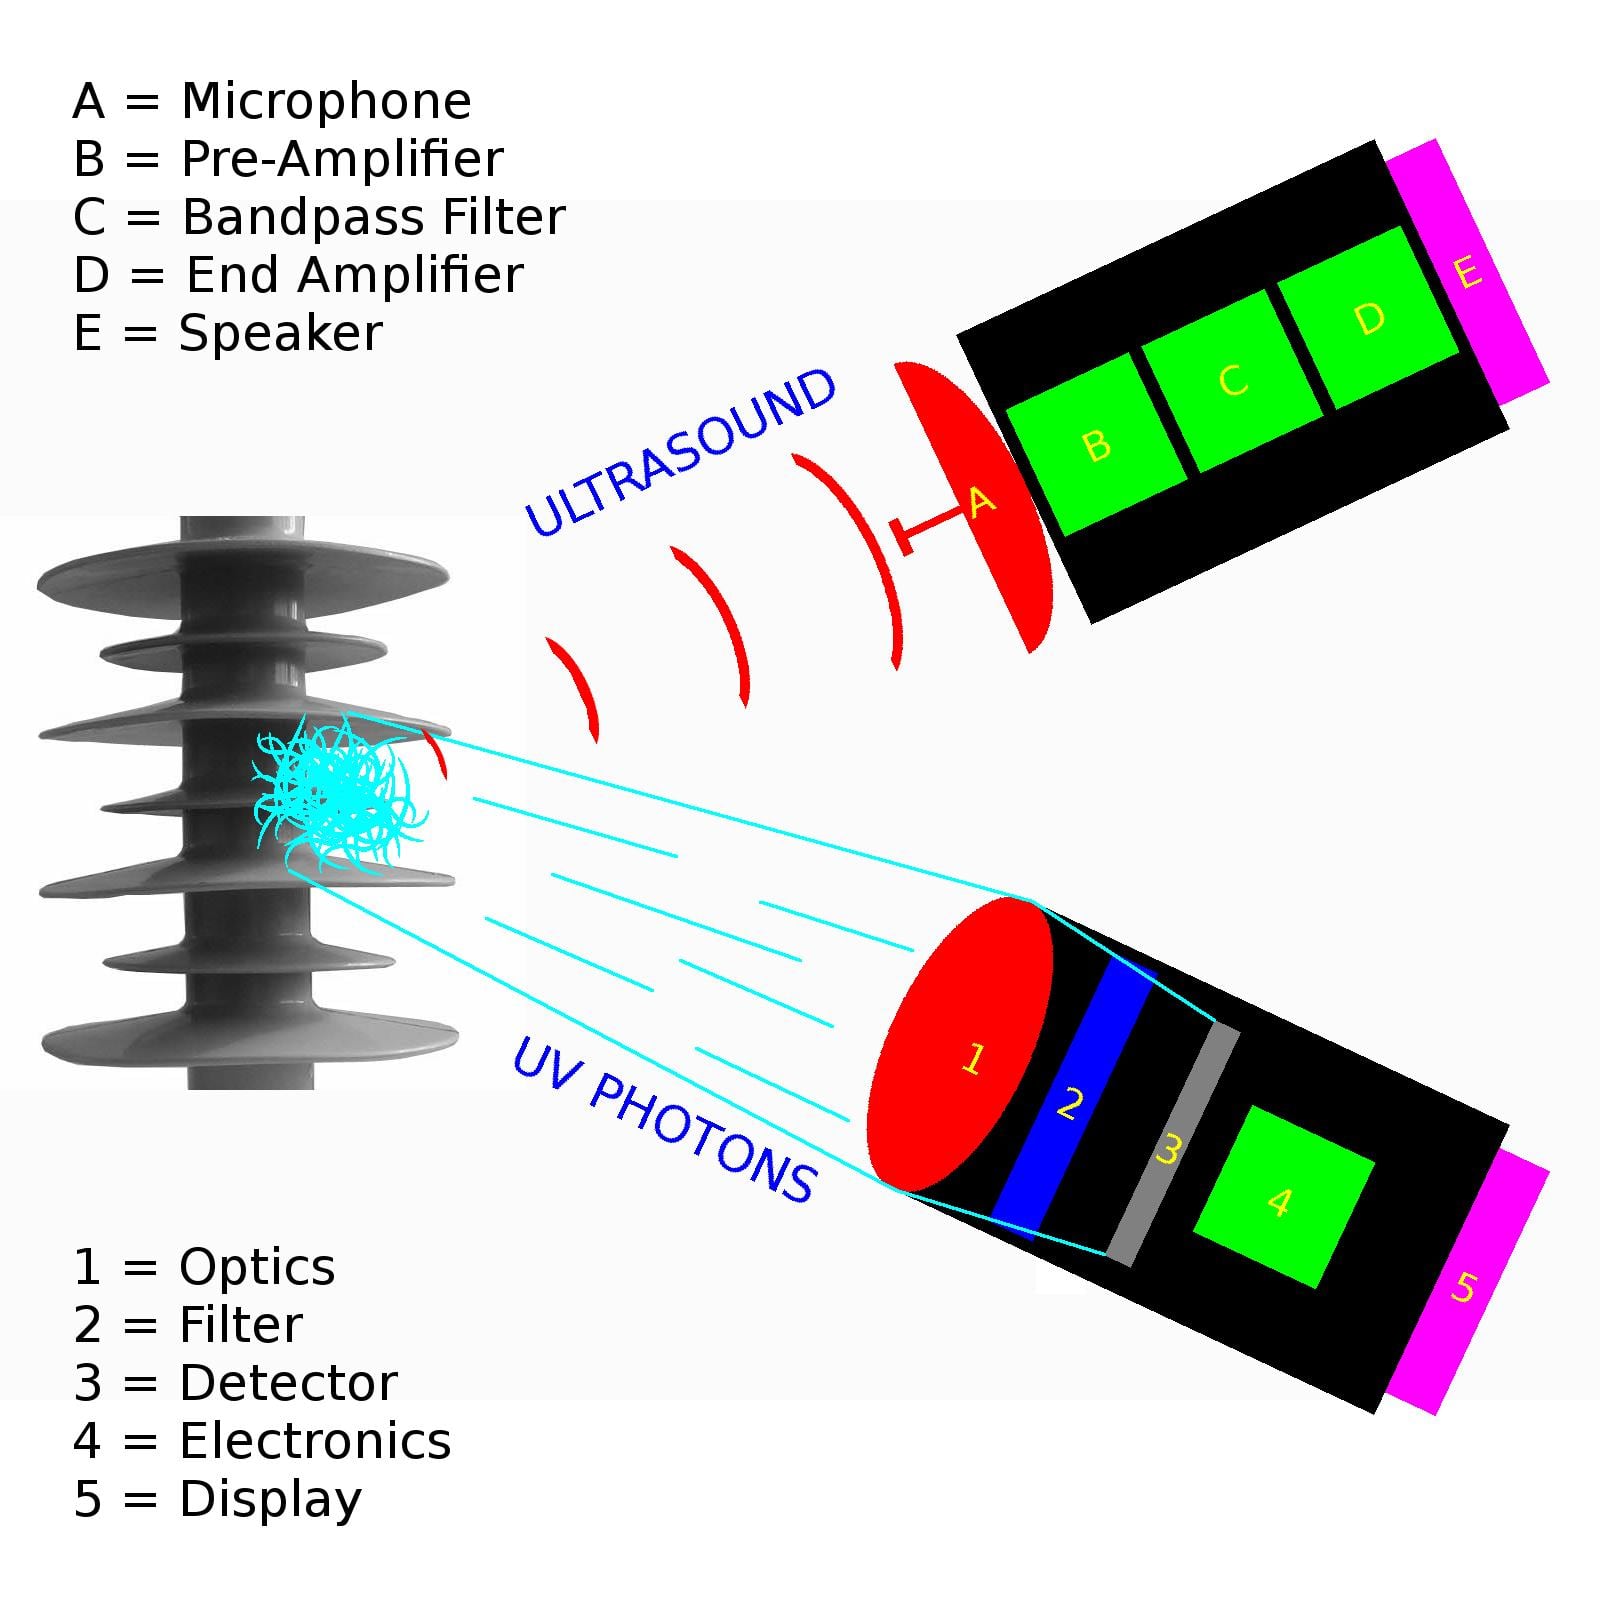 Principles of ultrasound and camera detectors.